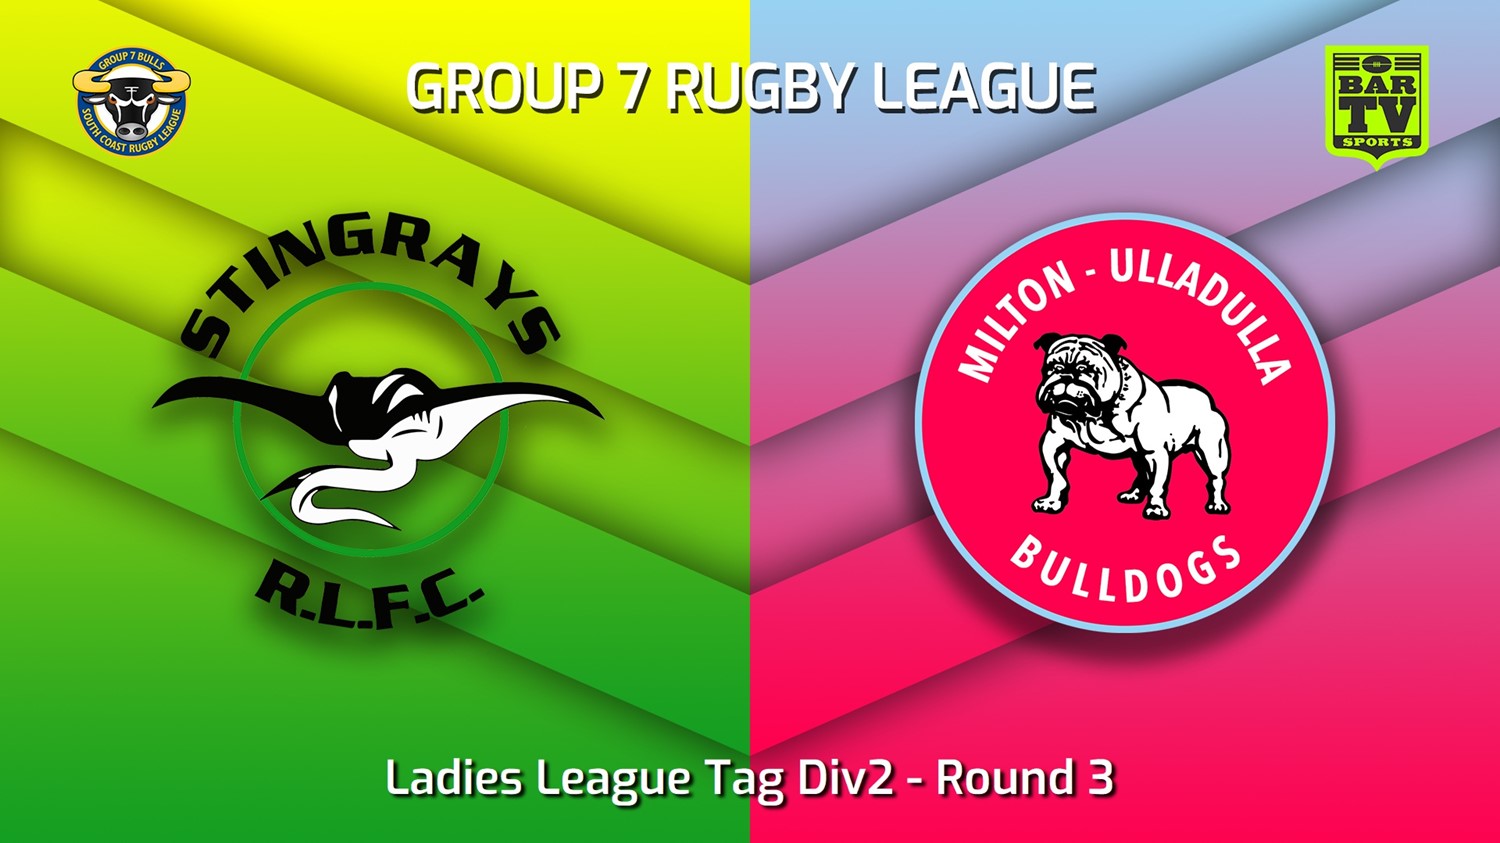 230415-South Coast Round 3 - Ladies League Tag Div2 - Stingrays of Shellharbour v Milton-Ulladulla Bulldogs Slate Image